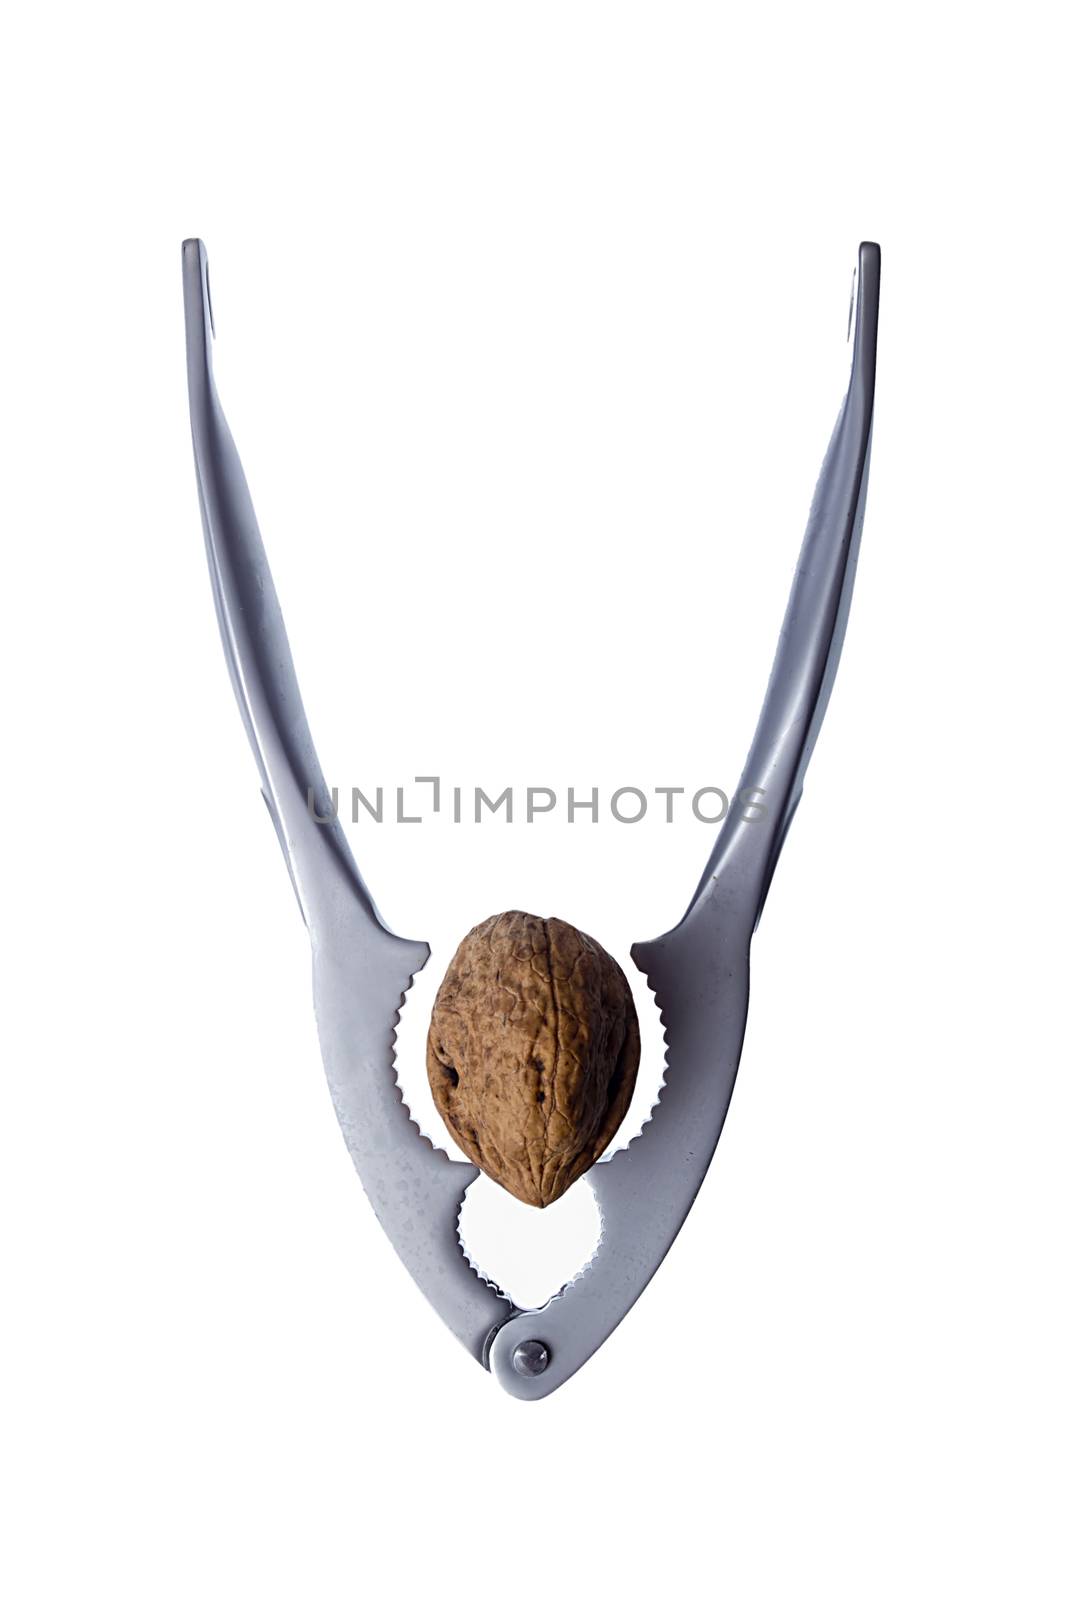 Steel nutcracker and walnut on white background